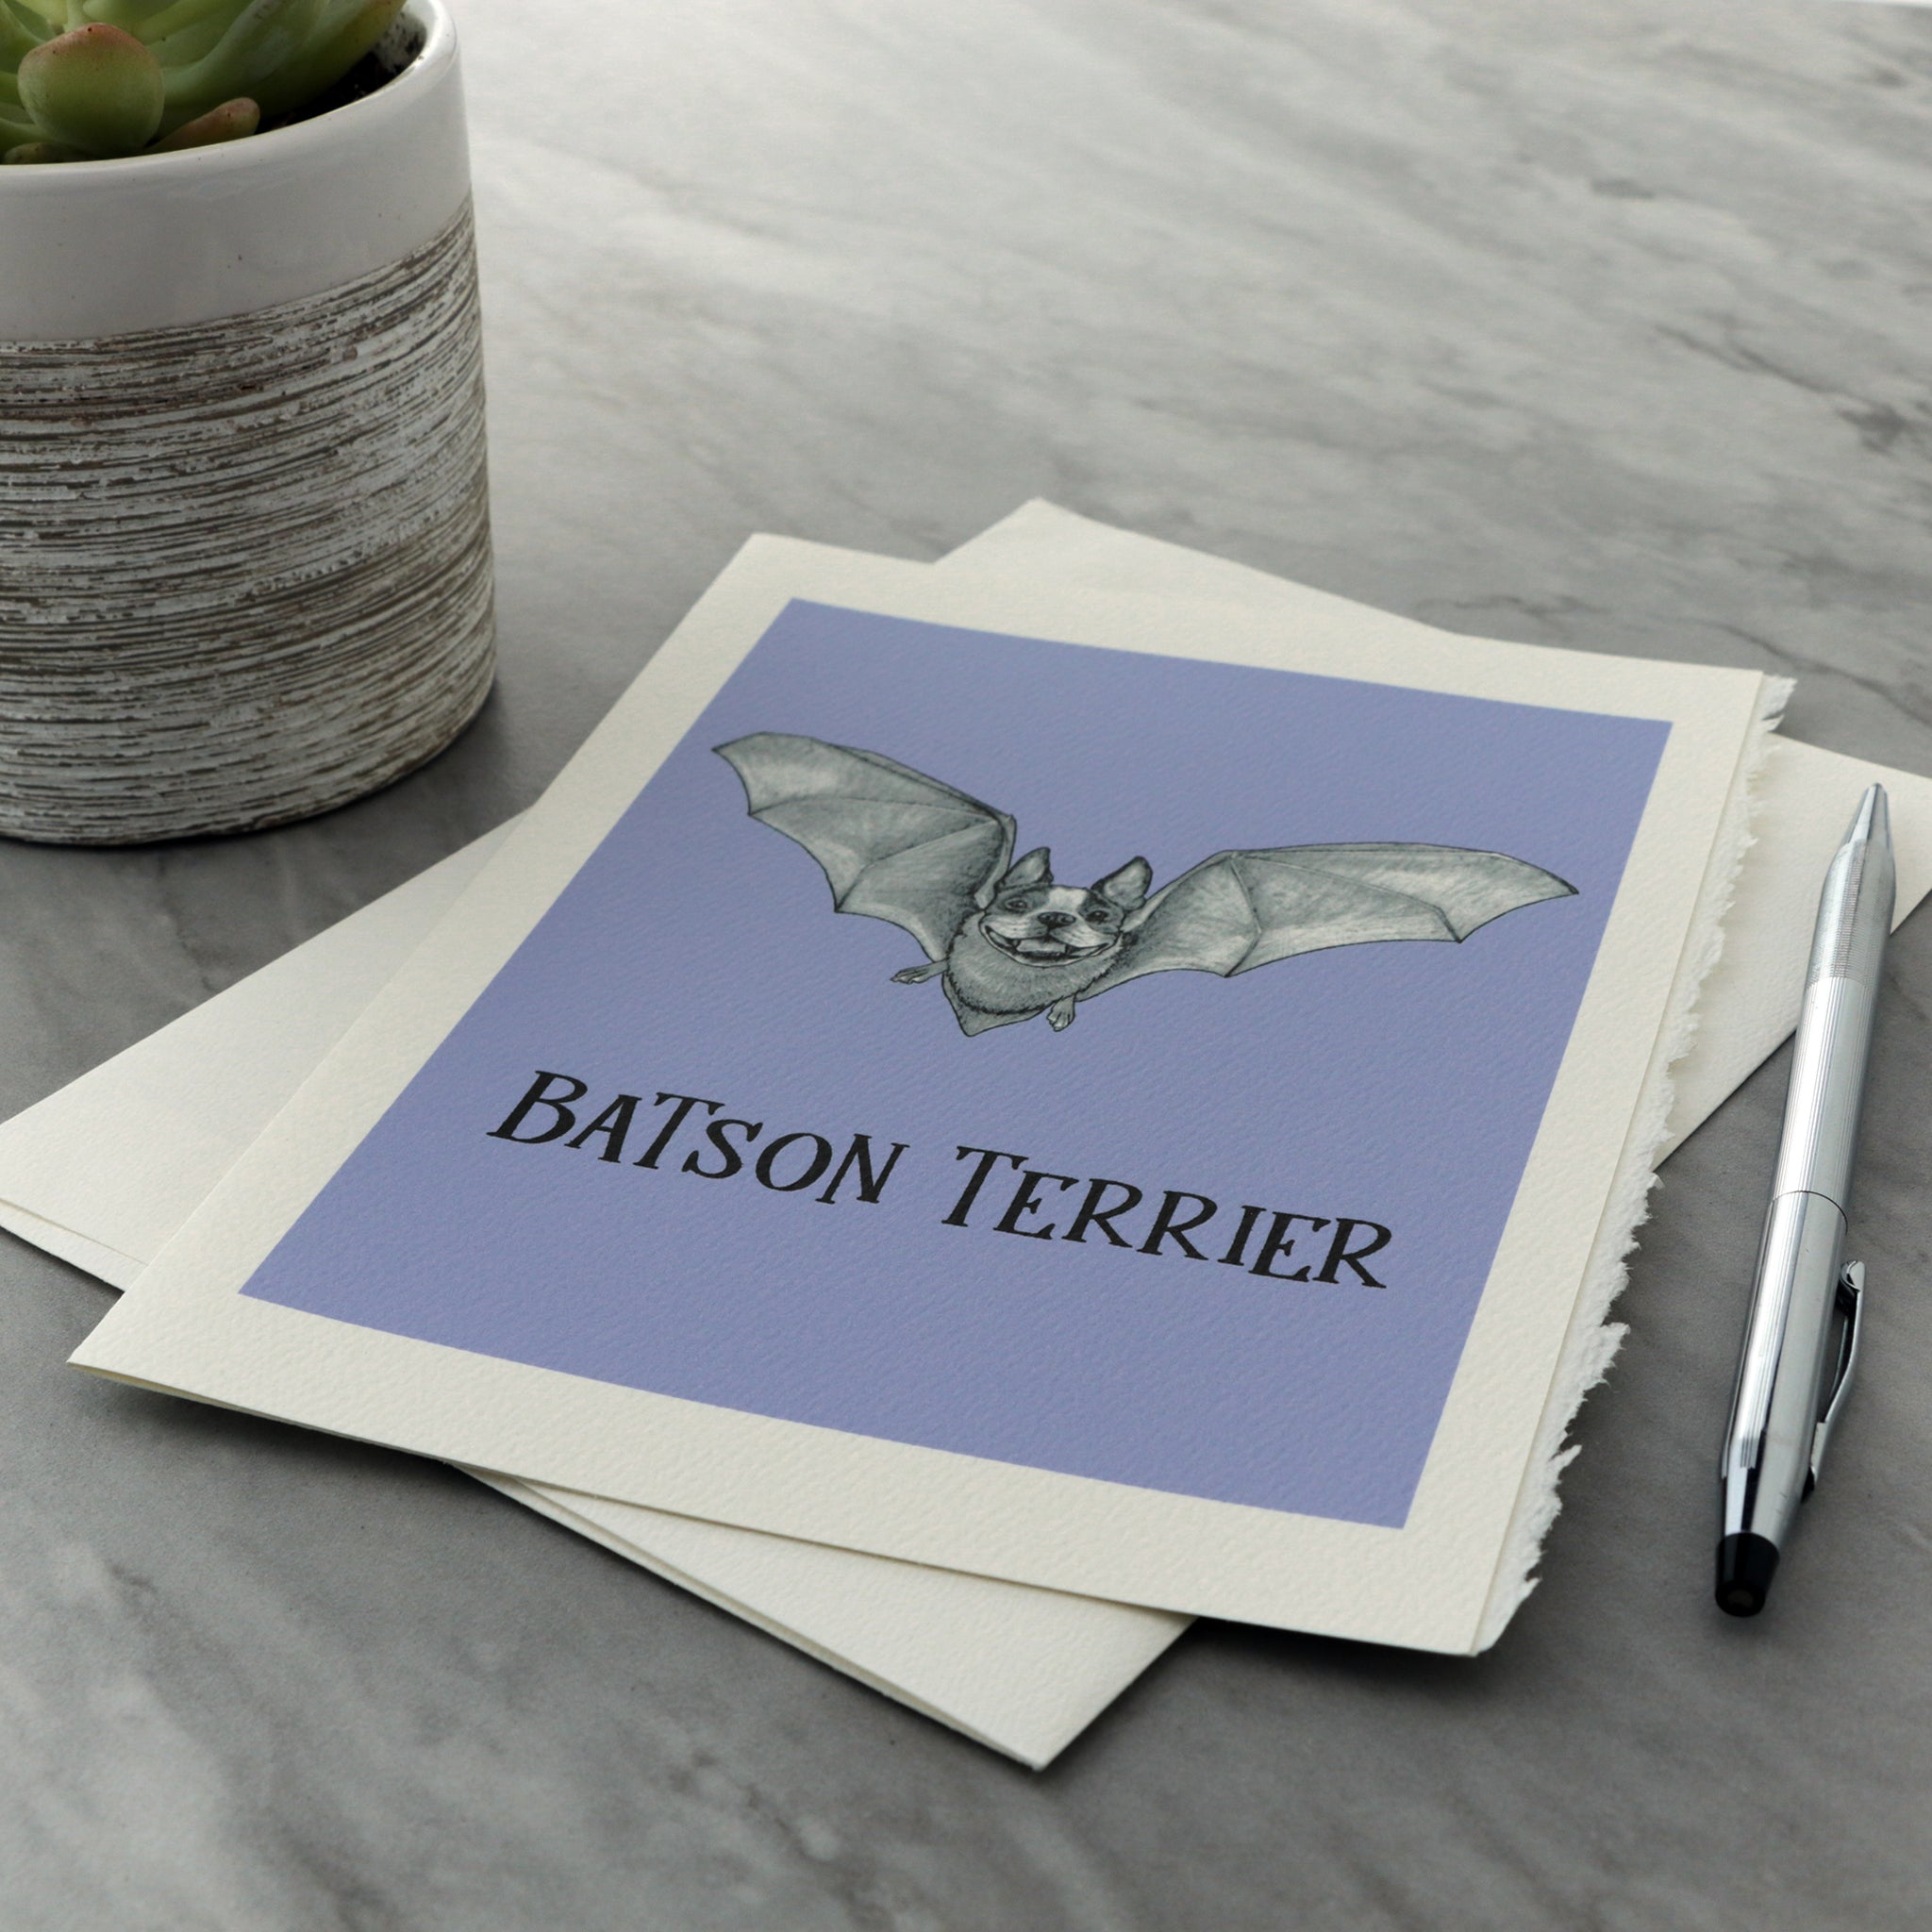 Batson Terrier 5x7" Greeting Card